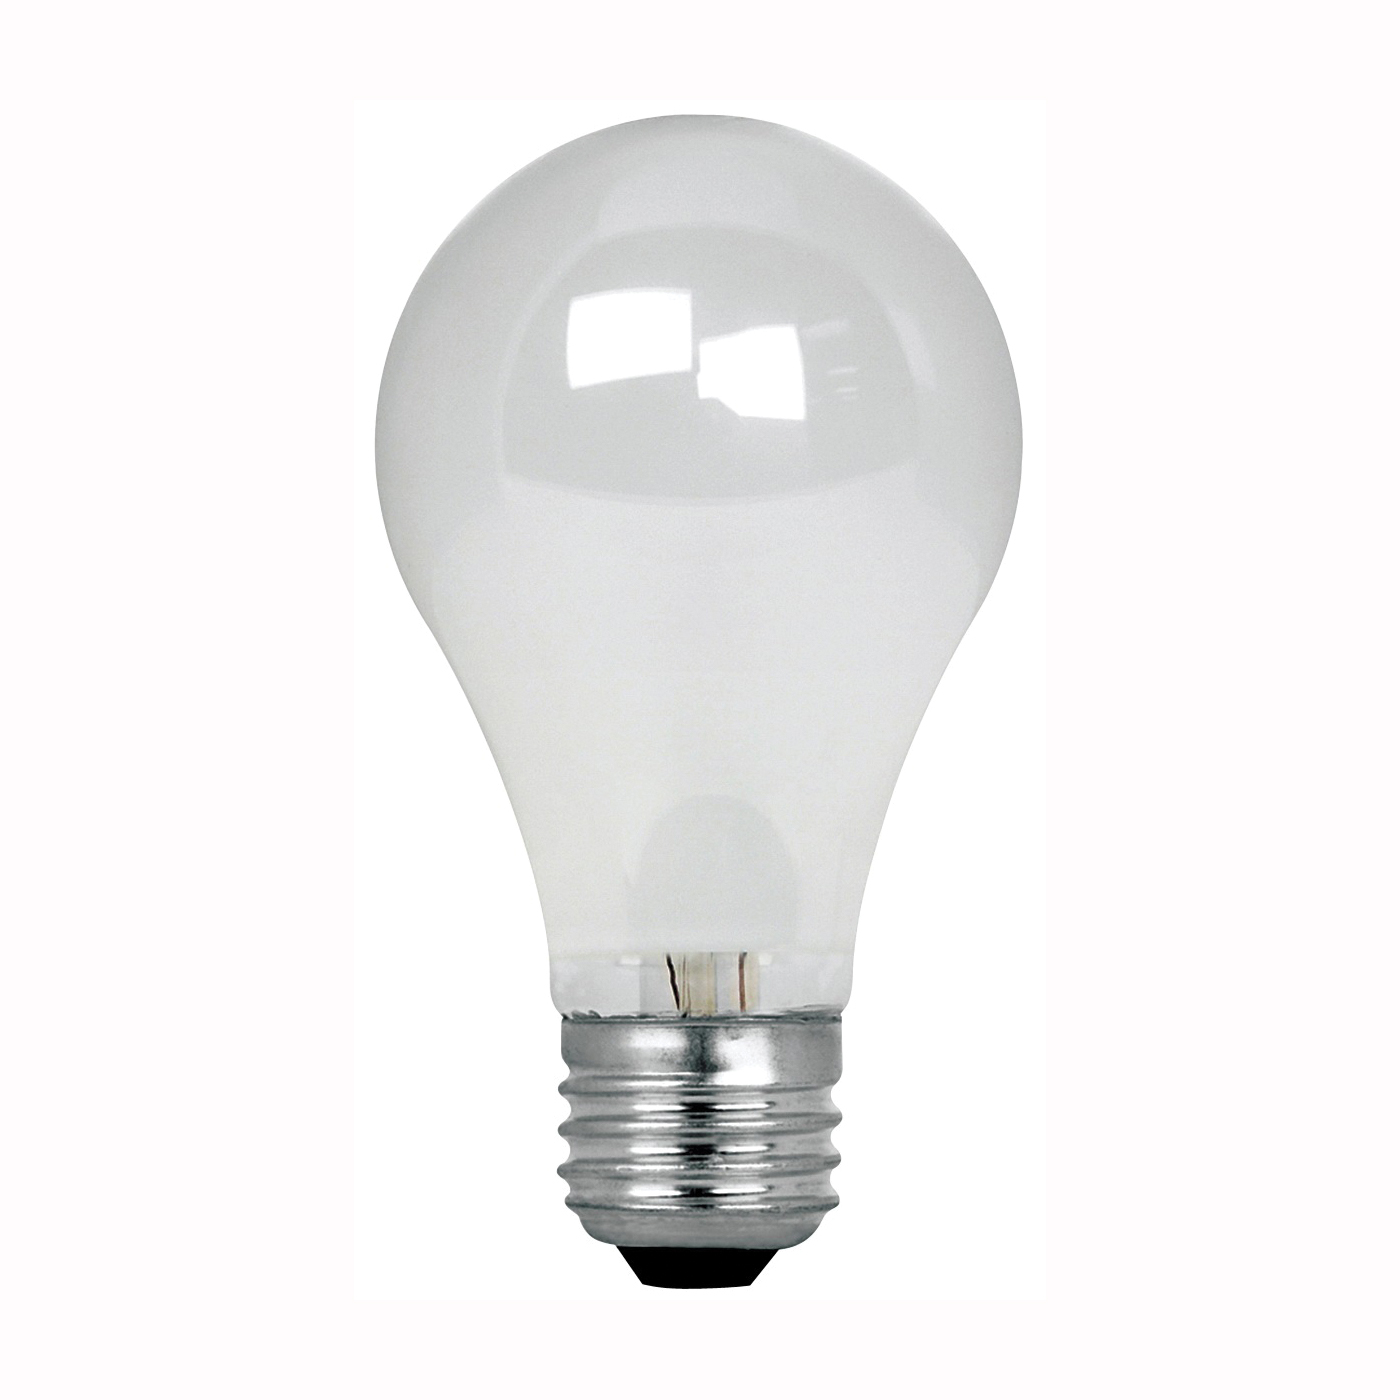 Q53A/W/4/RP Halogen Bulb, 53 W, Medium E26 Lamp Base, A19 Lamp, Soft White Light, 1050 Lumens